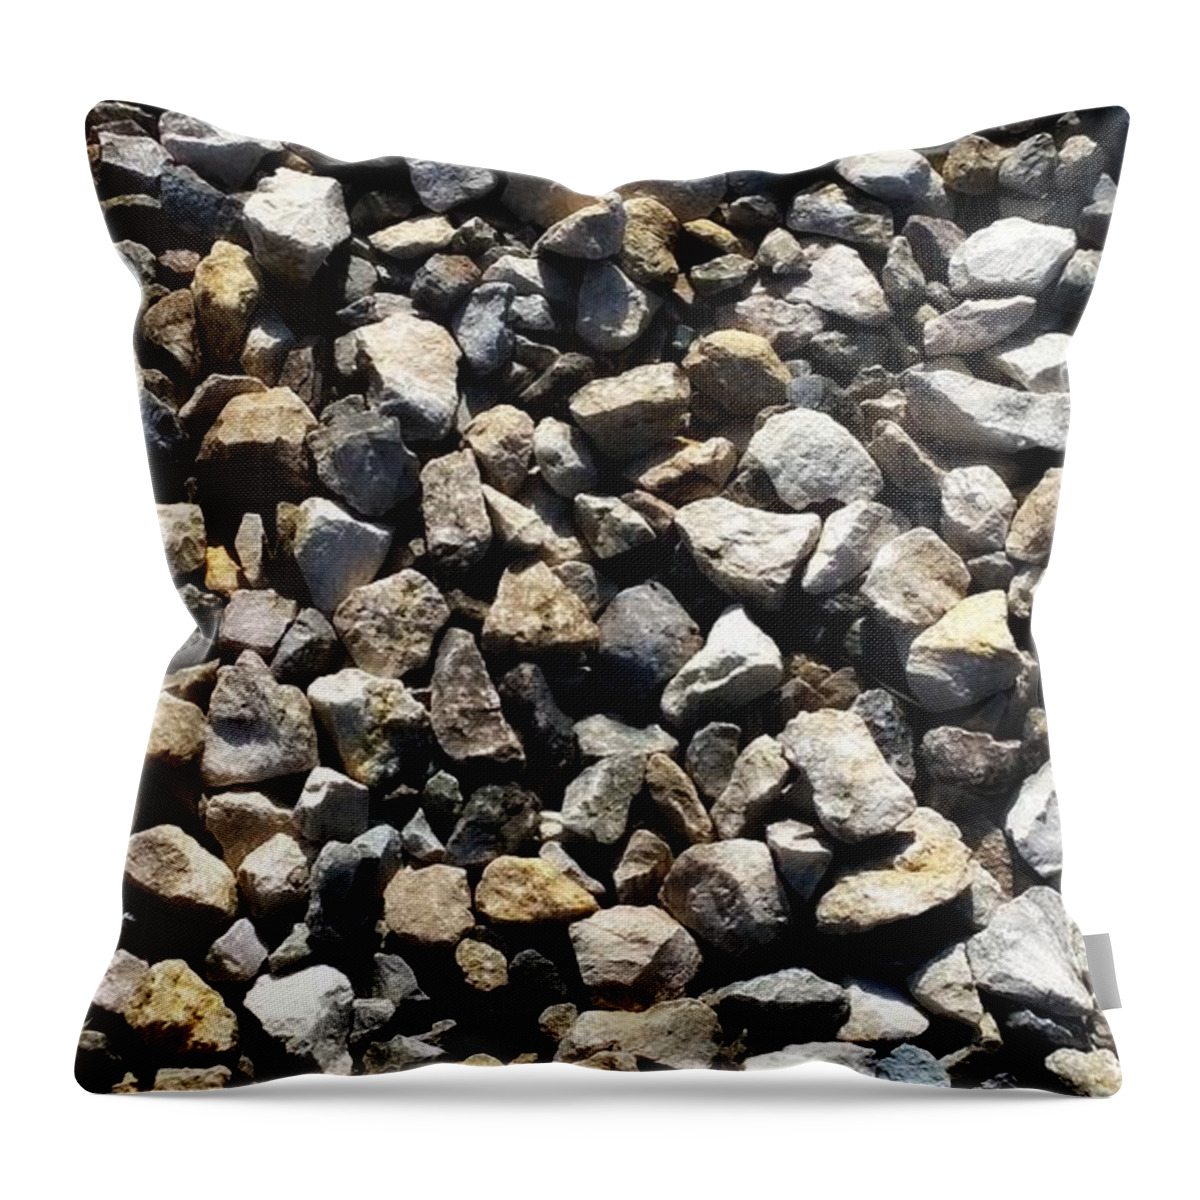 Rocks Throw Pillow featuring the photograph Rocks by Jennifer E Doll